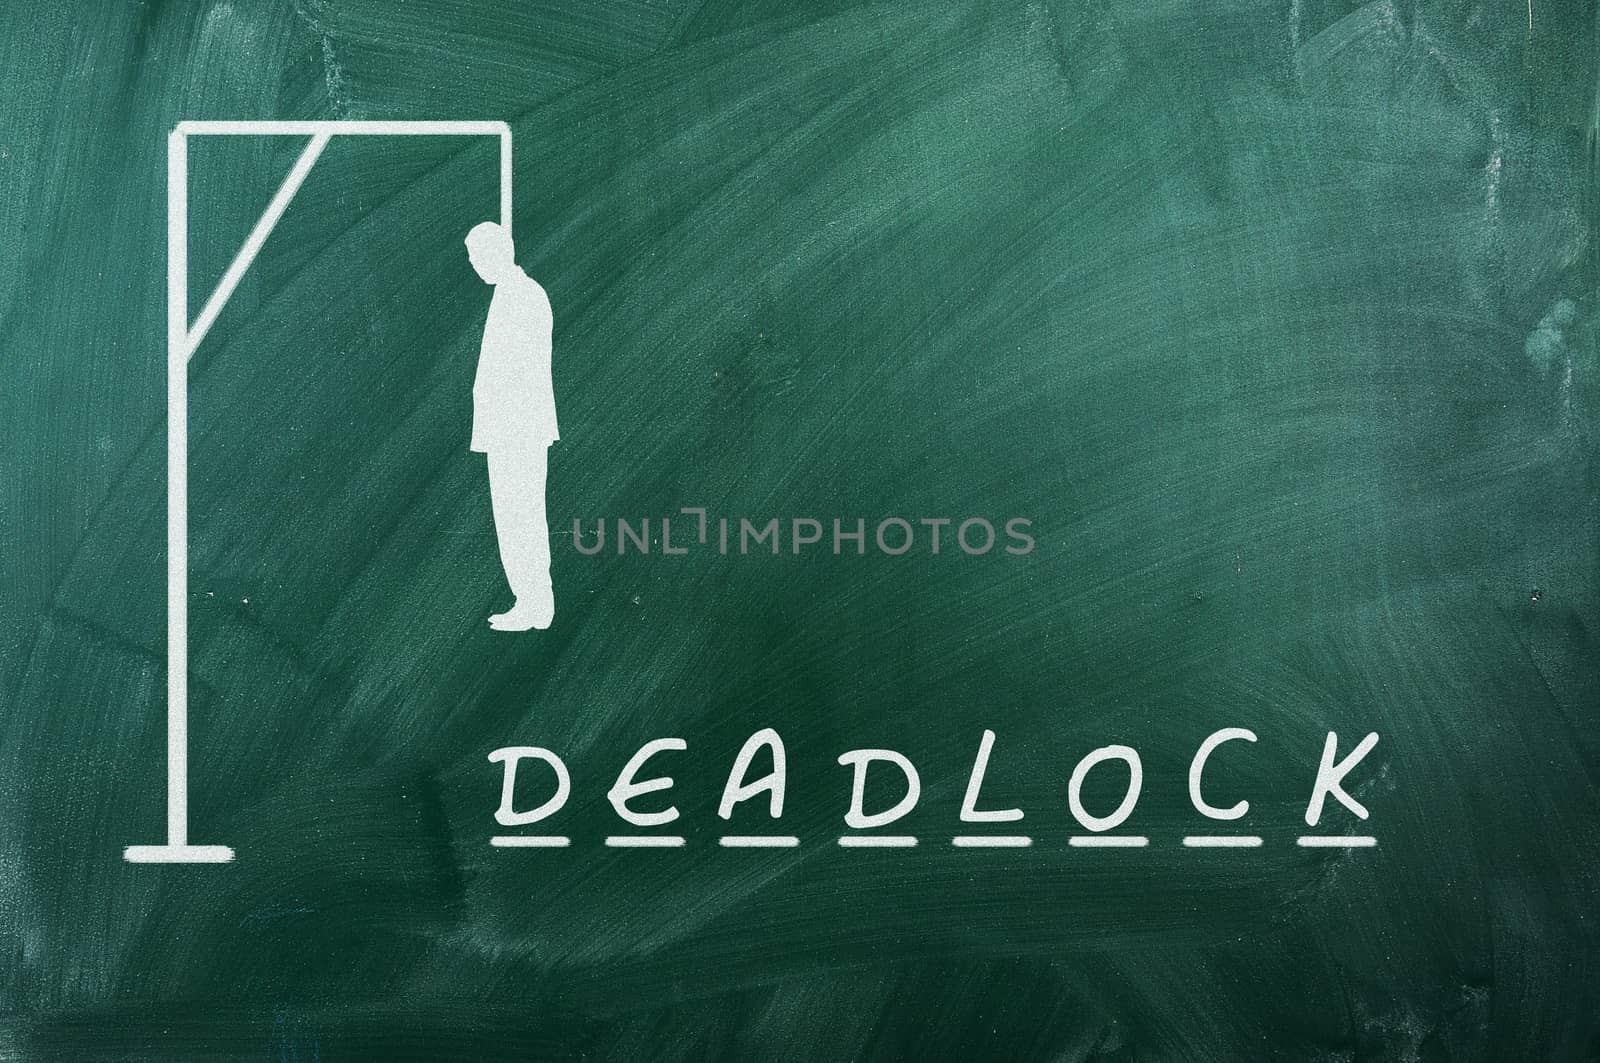 Hangman game on green chalkboard ,concept of deadlock